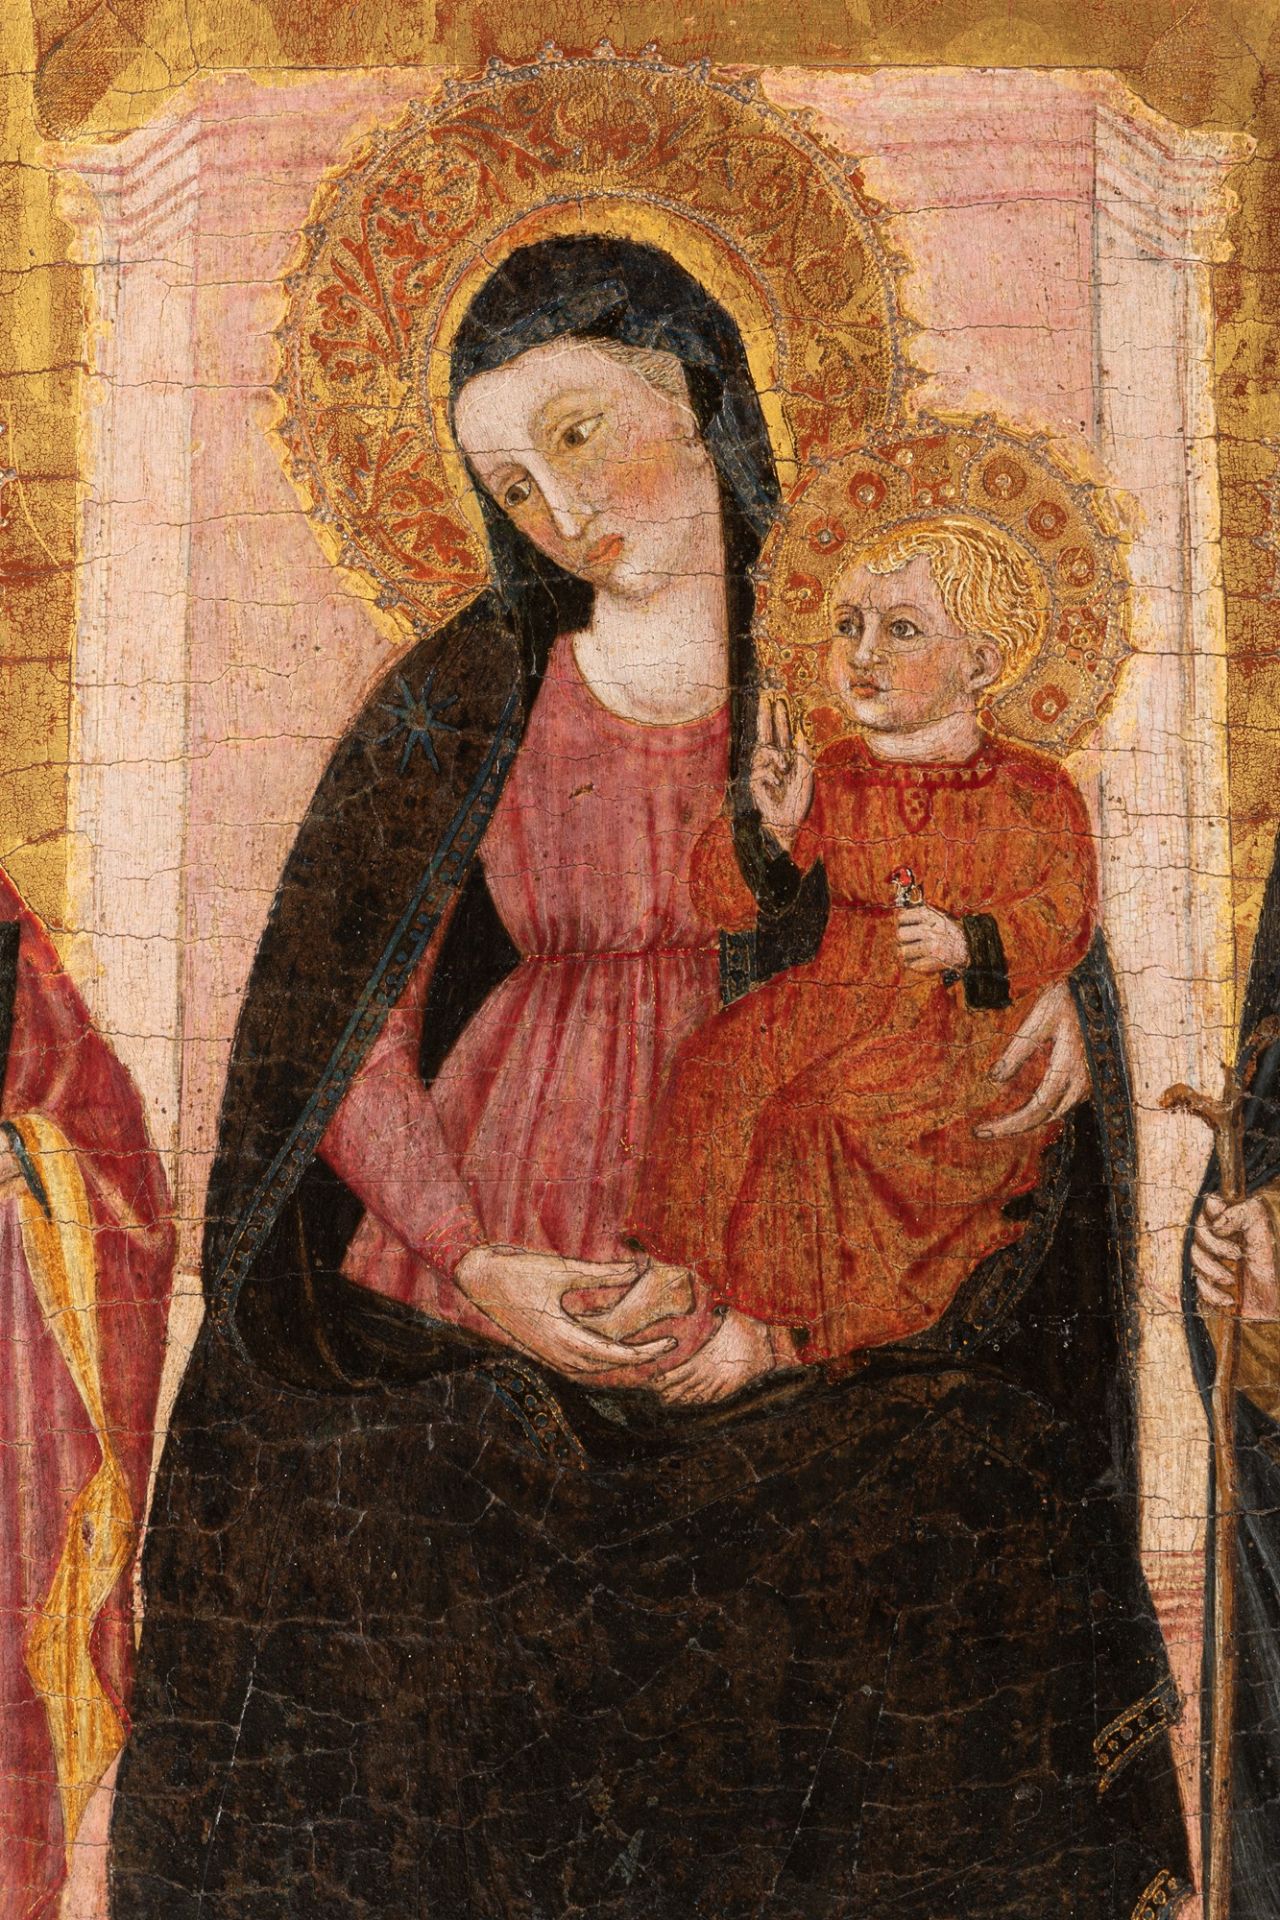 Tuscan school, end of the fourteenth century - beginning of the fifteenth century - Virgin and Child - Bild 3 aus 7